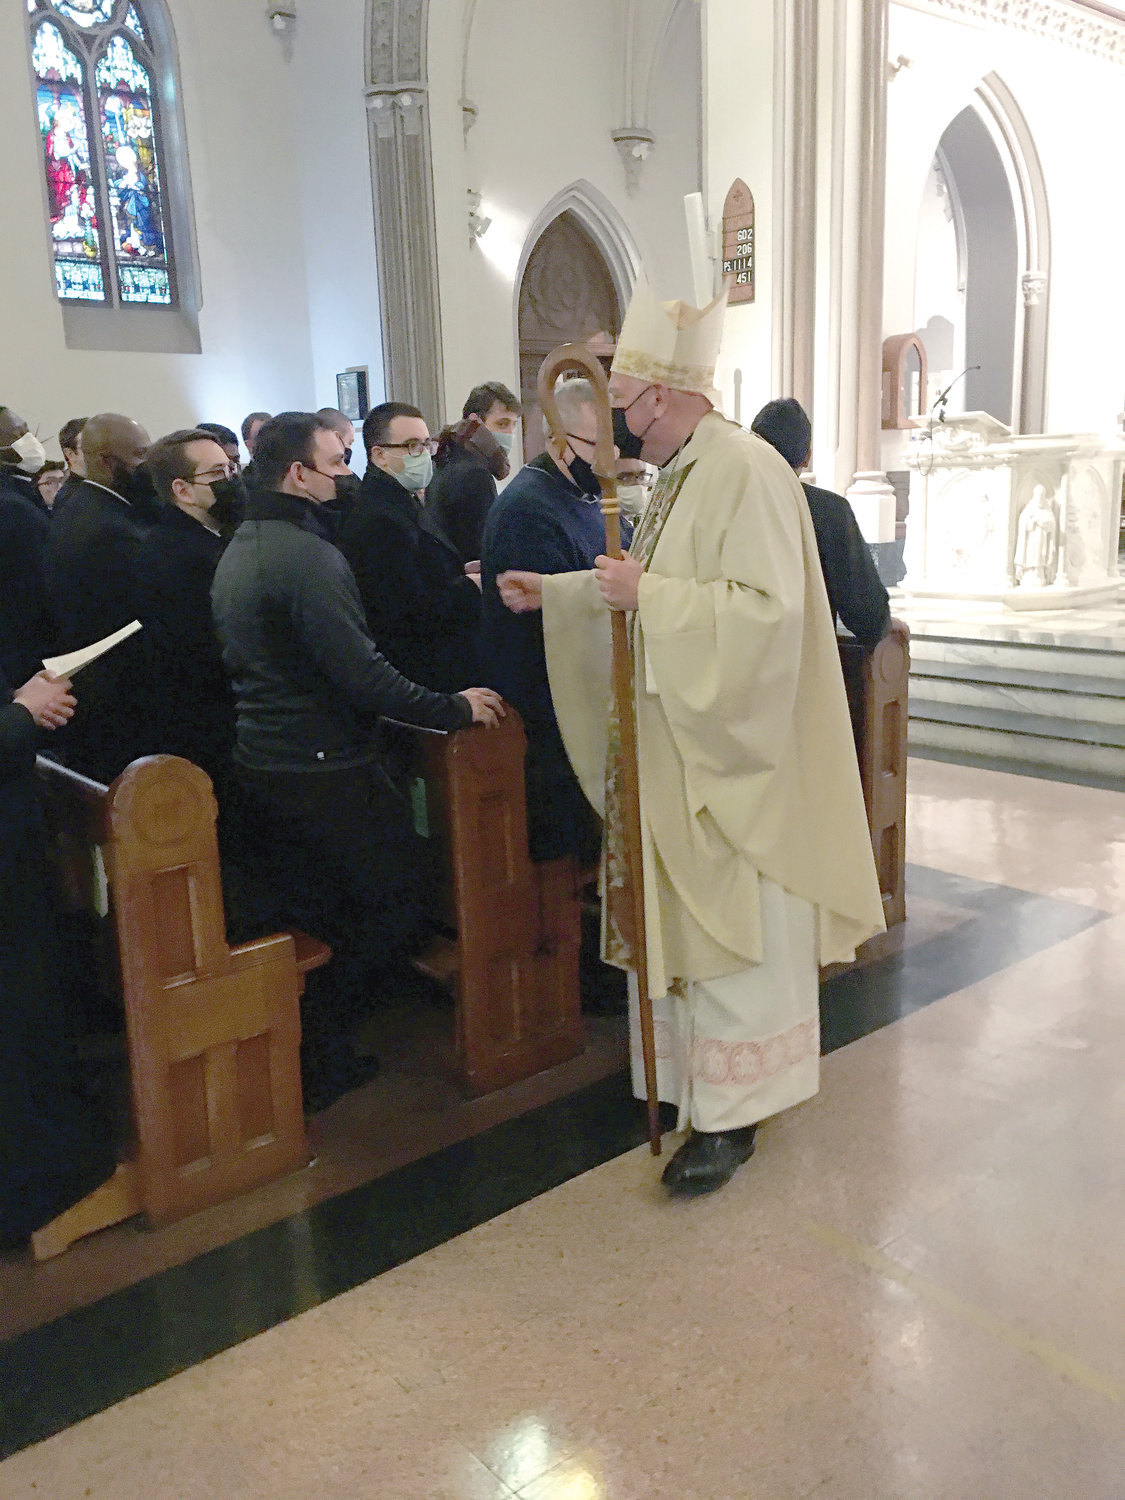 The cardinal greets seminarians from St. Joseph’s Seminary, Dunwoodie, at Mass.